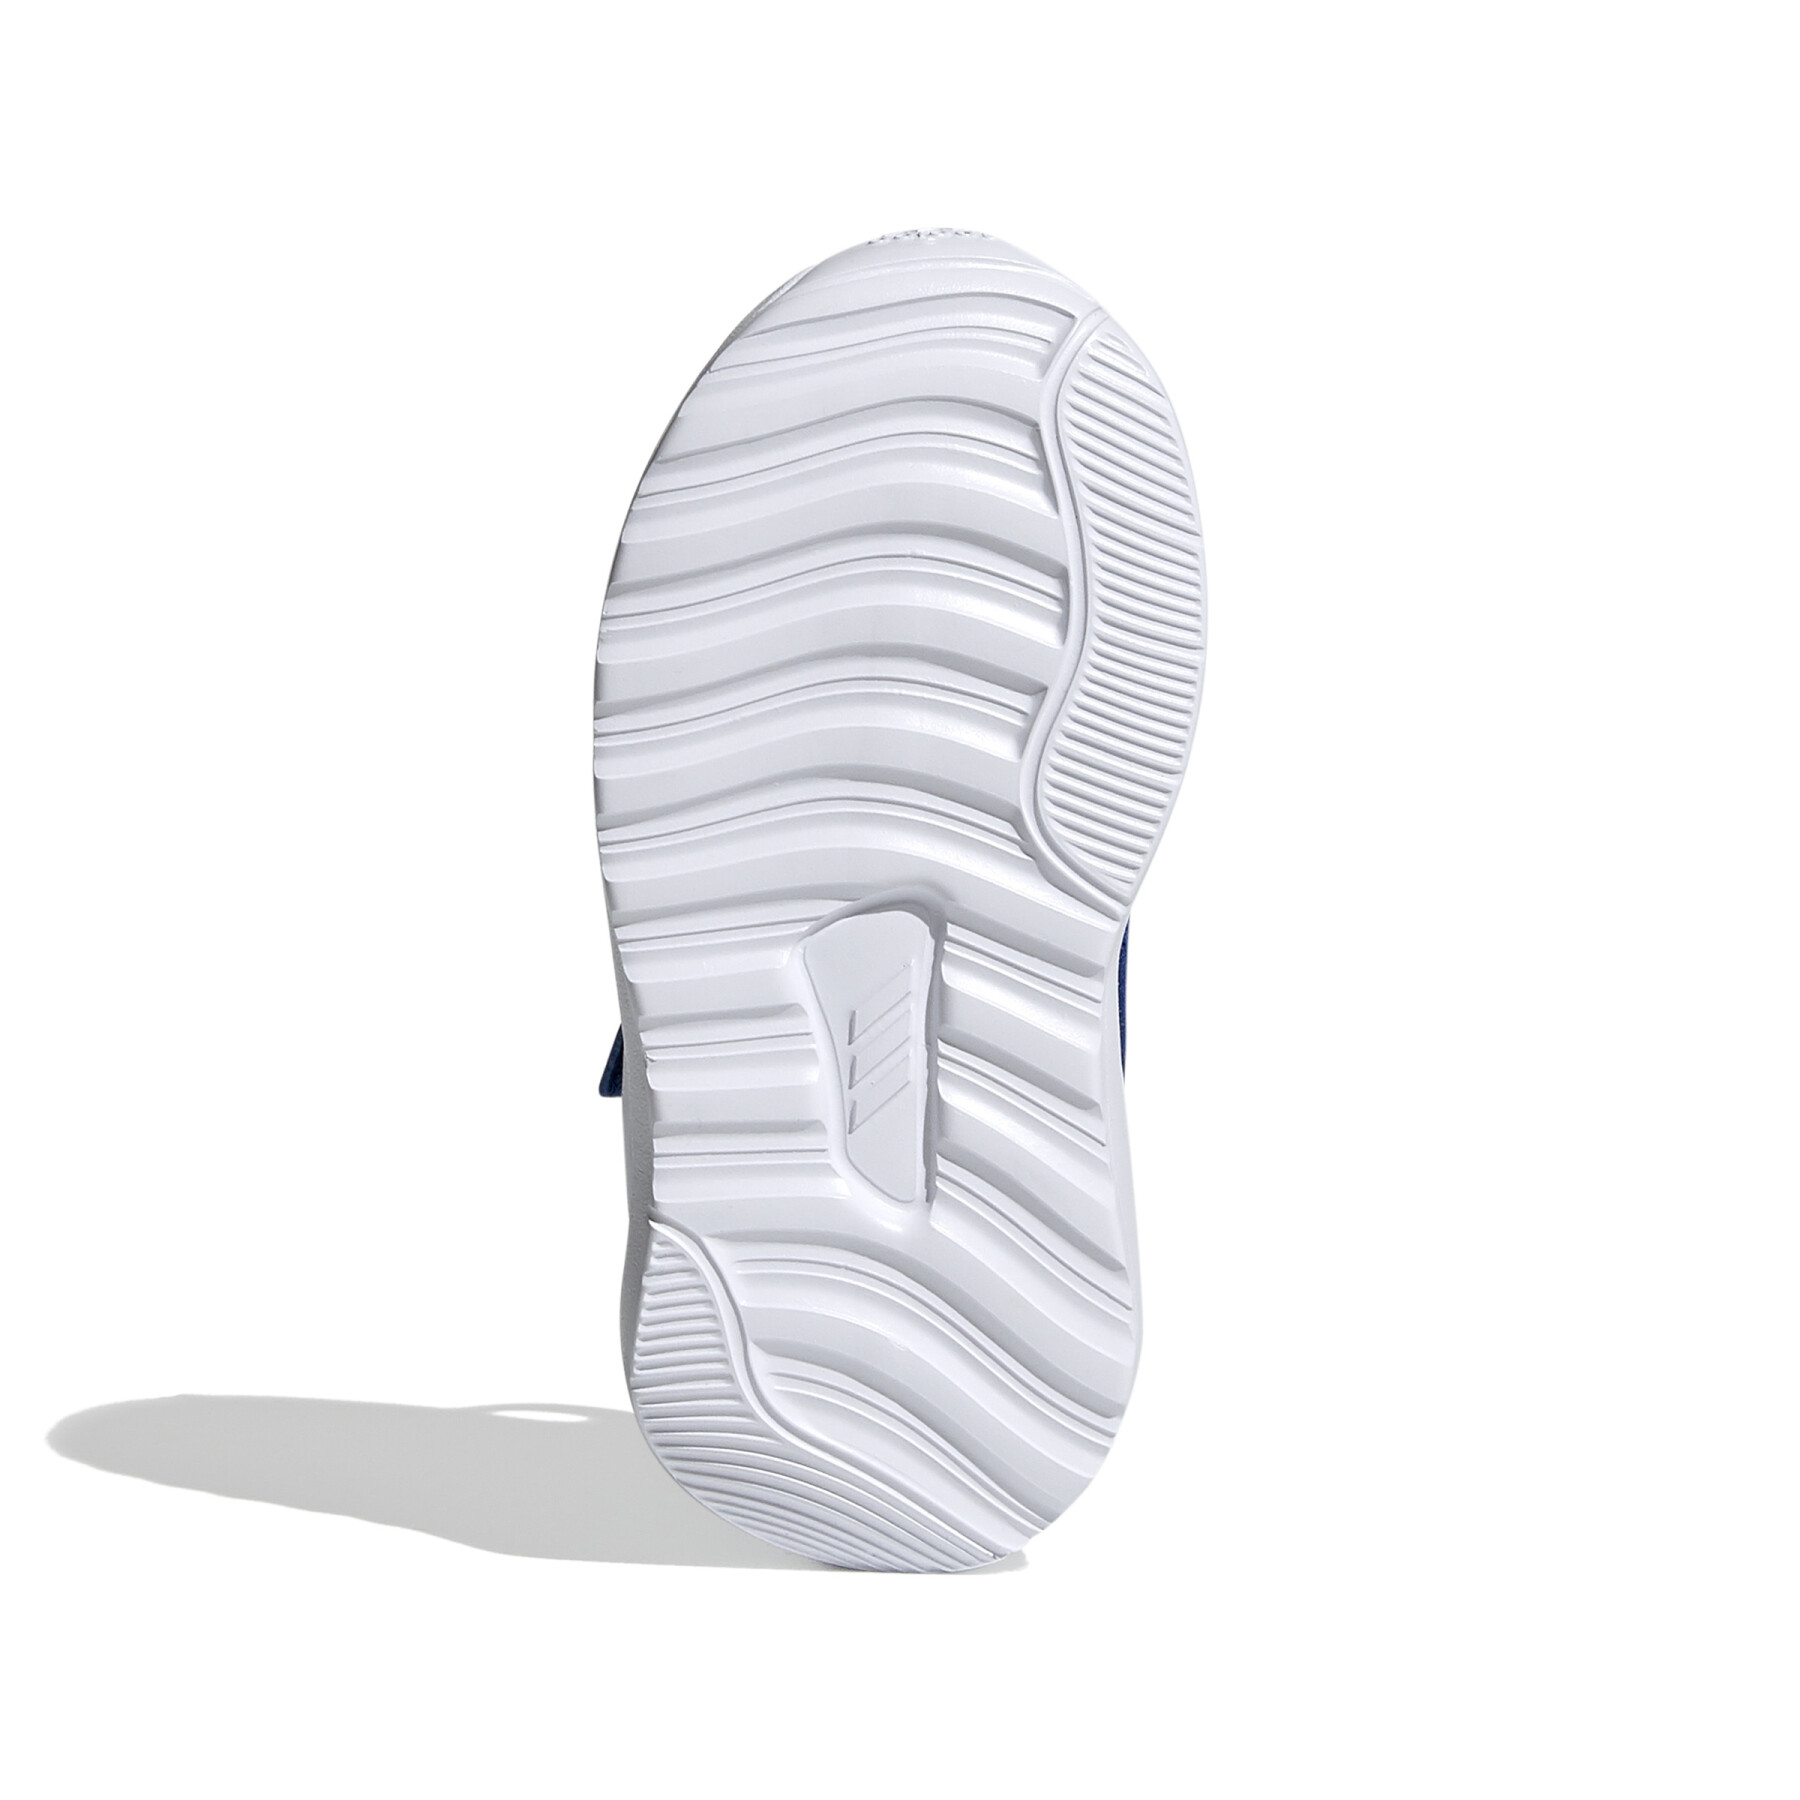 Sneakers adidas FortaRun Running 2020